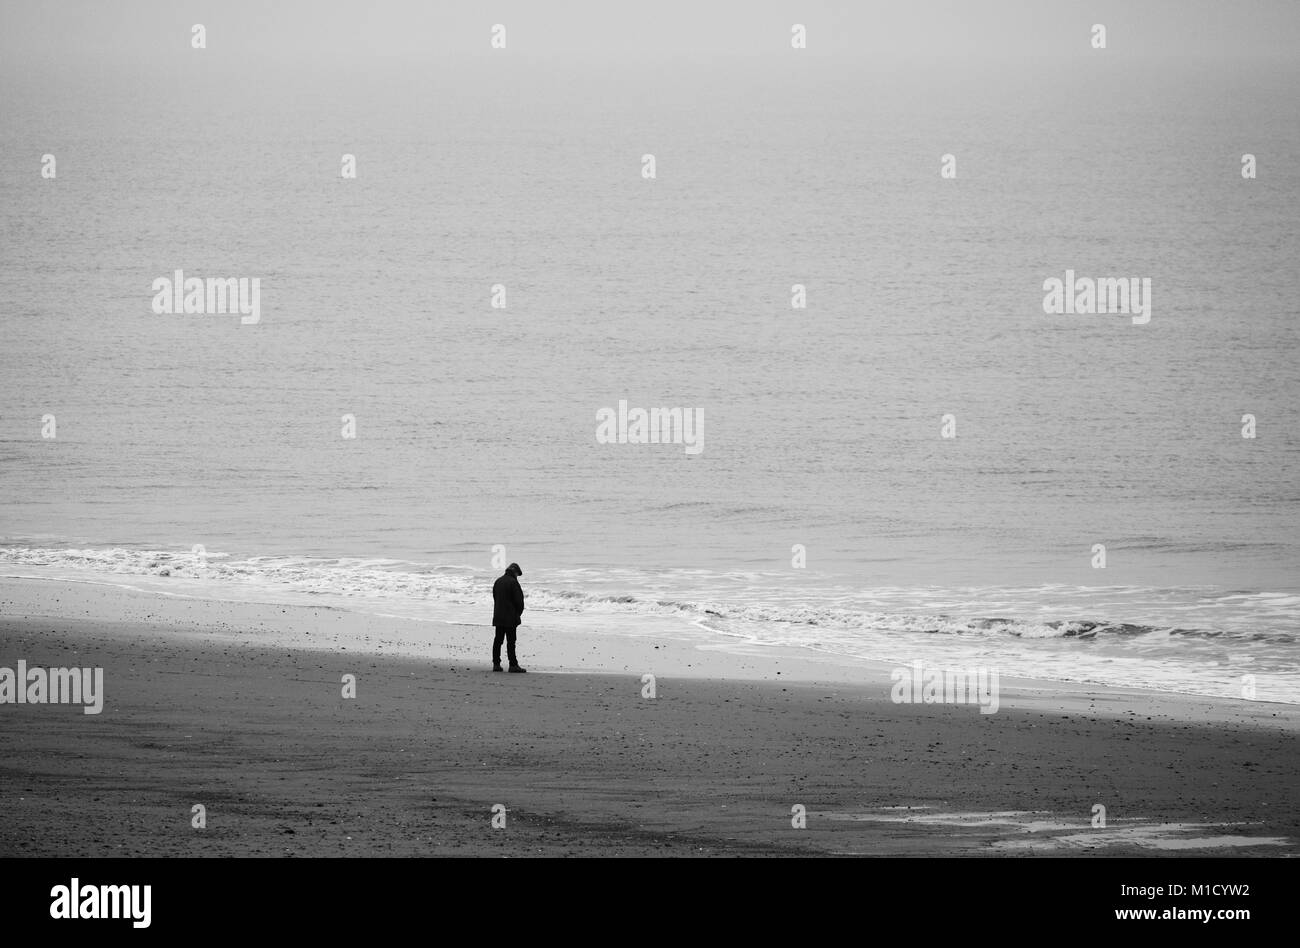 A man alone on a beach facing the sea. Stock Photo